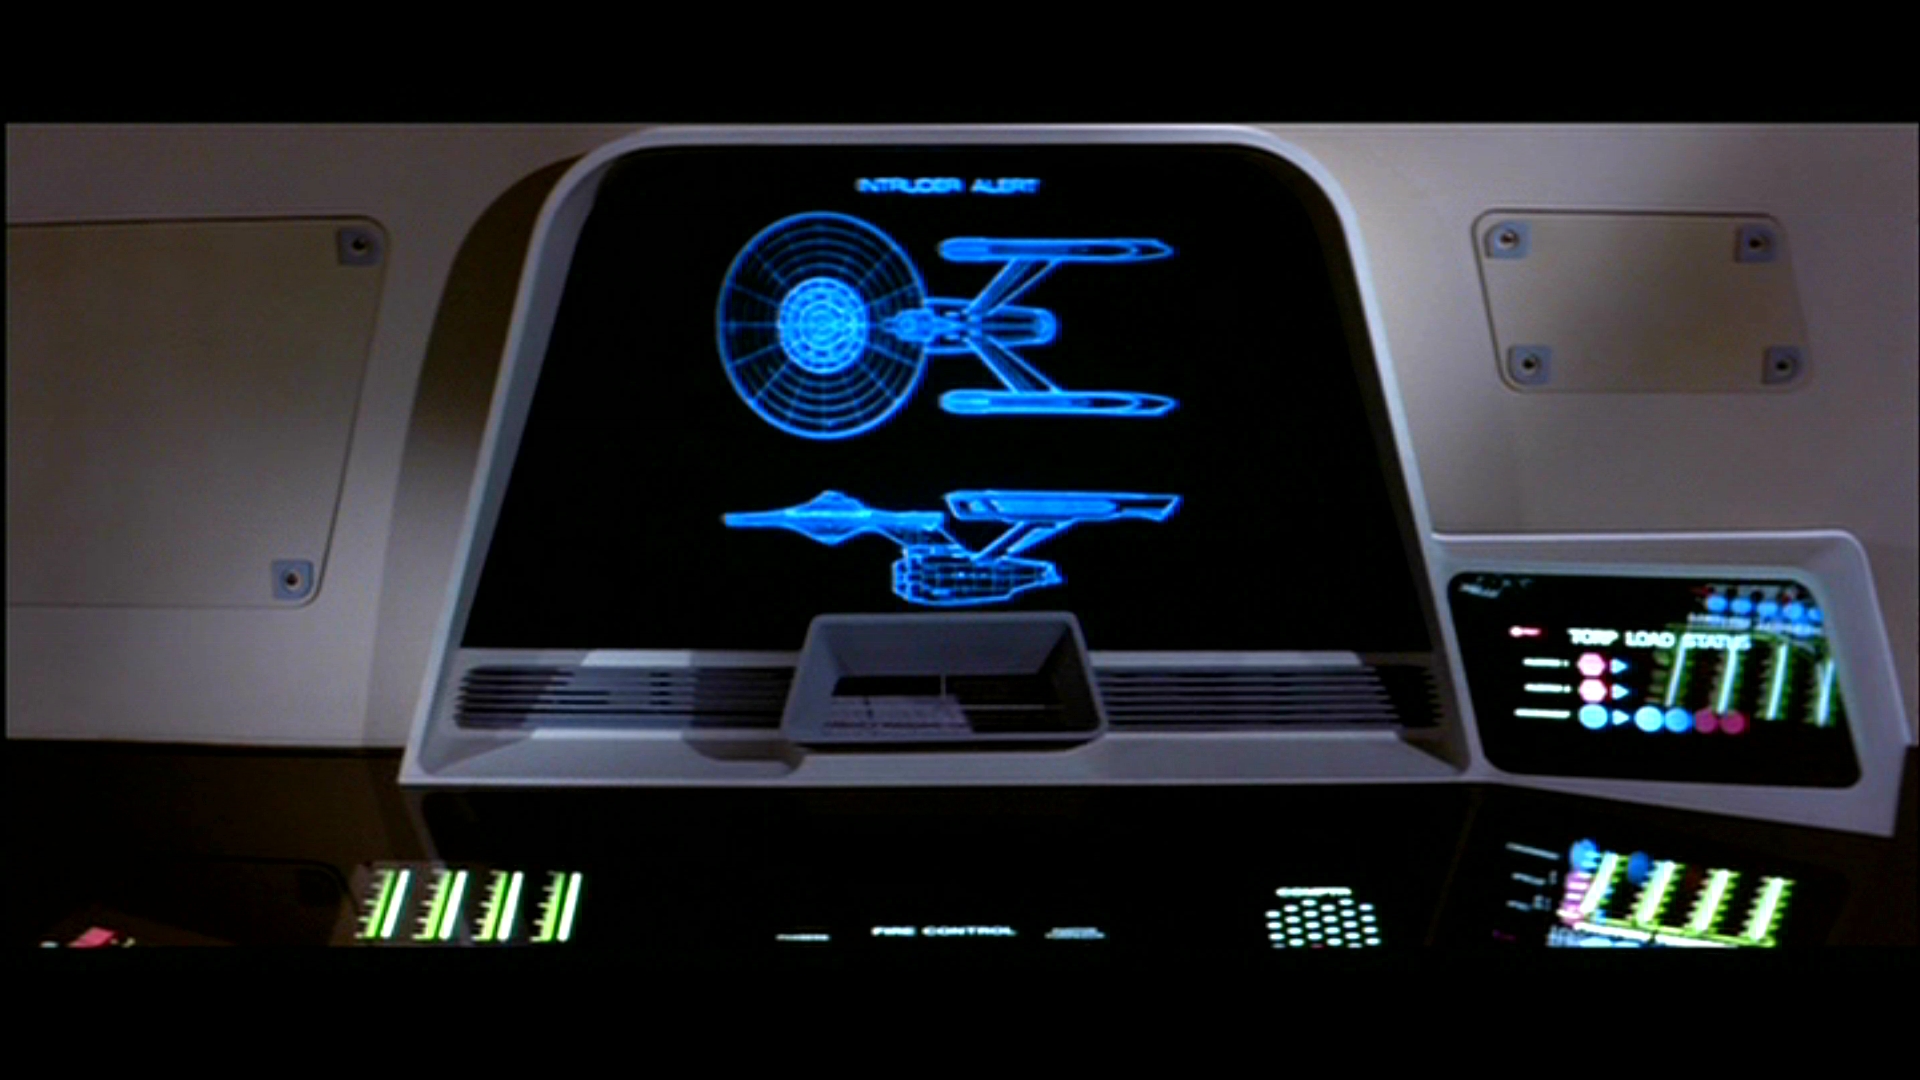 Movie Star Trek II: The Wrath of Khan HD Wallpaper | Background Image